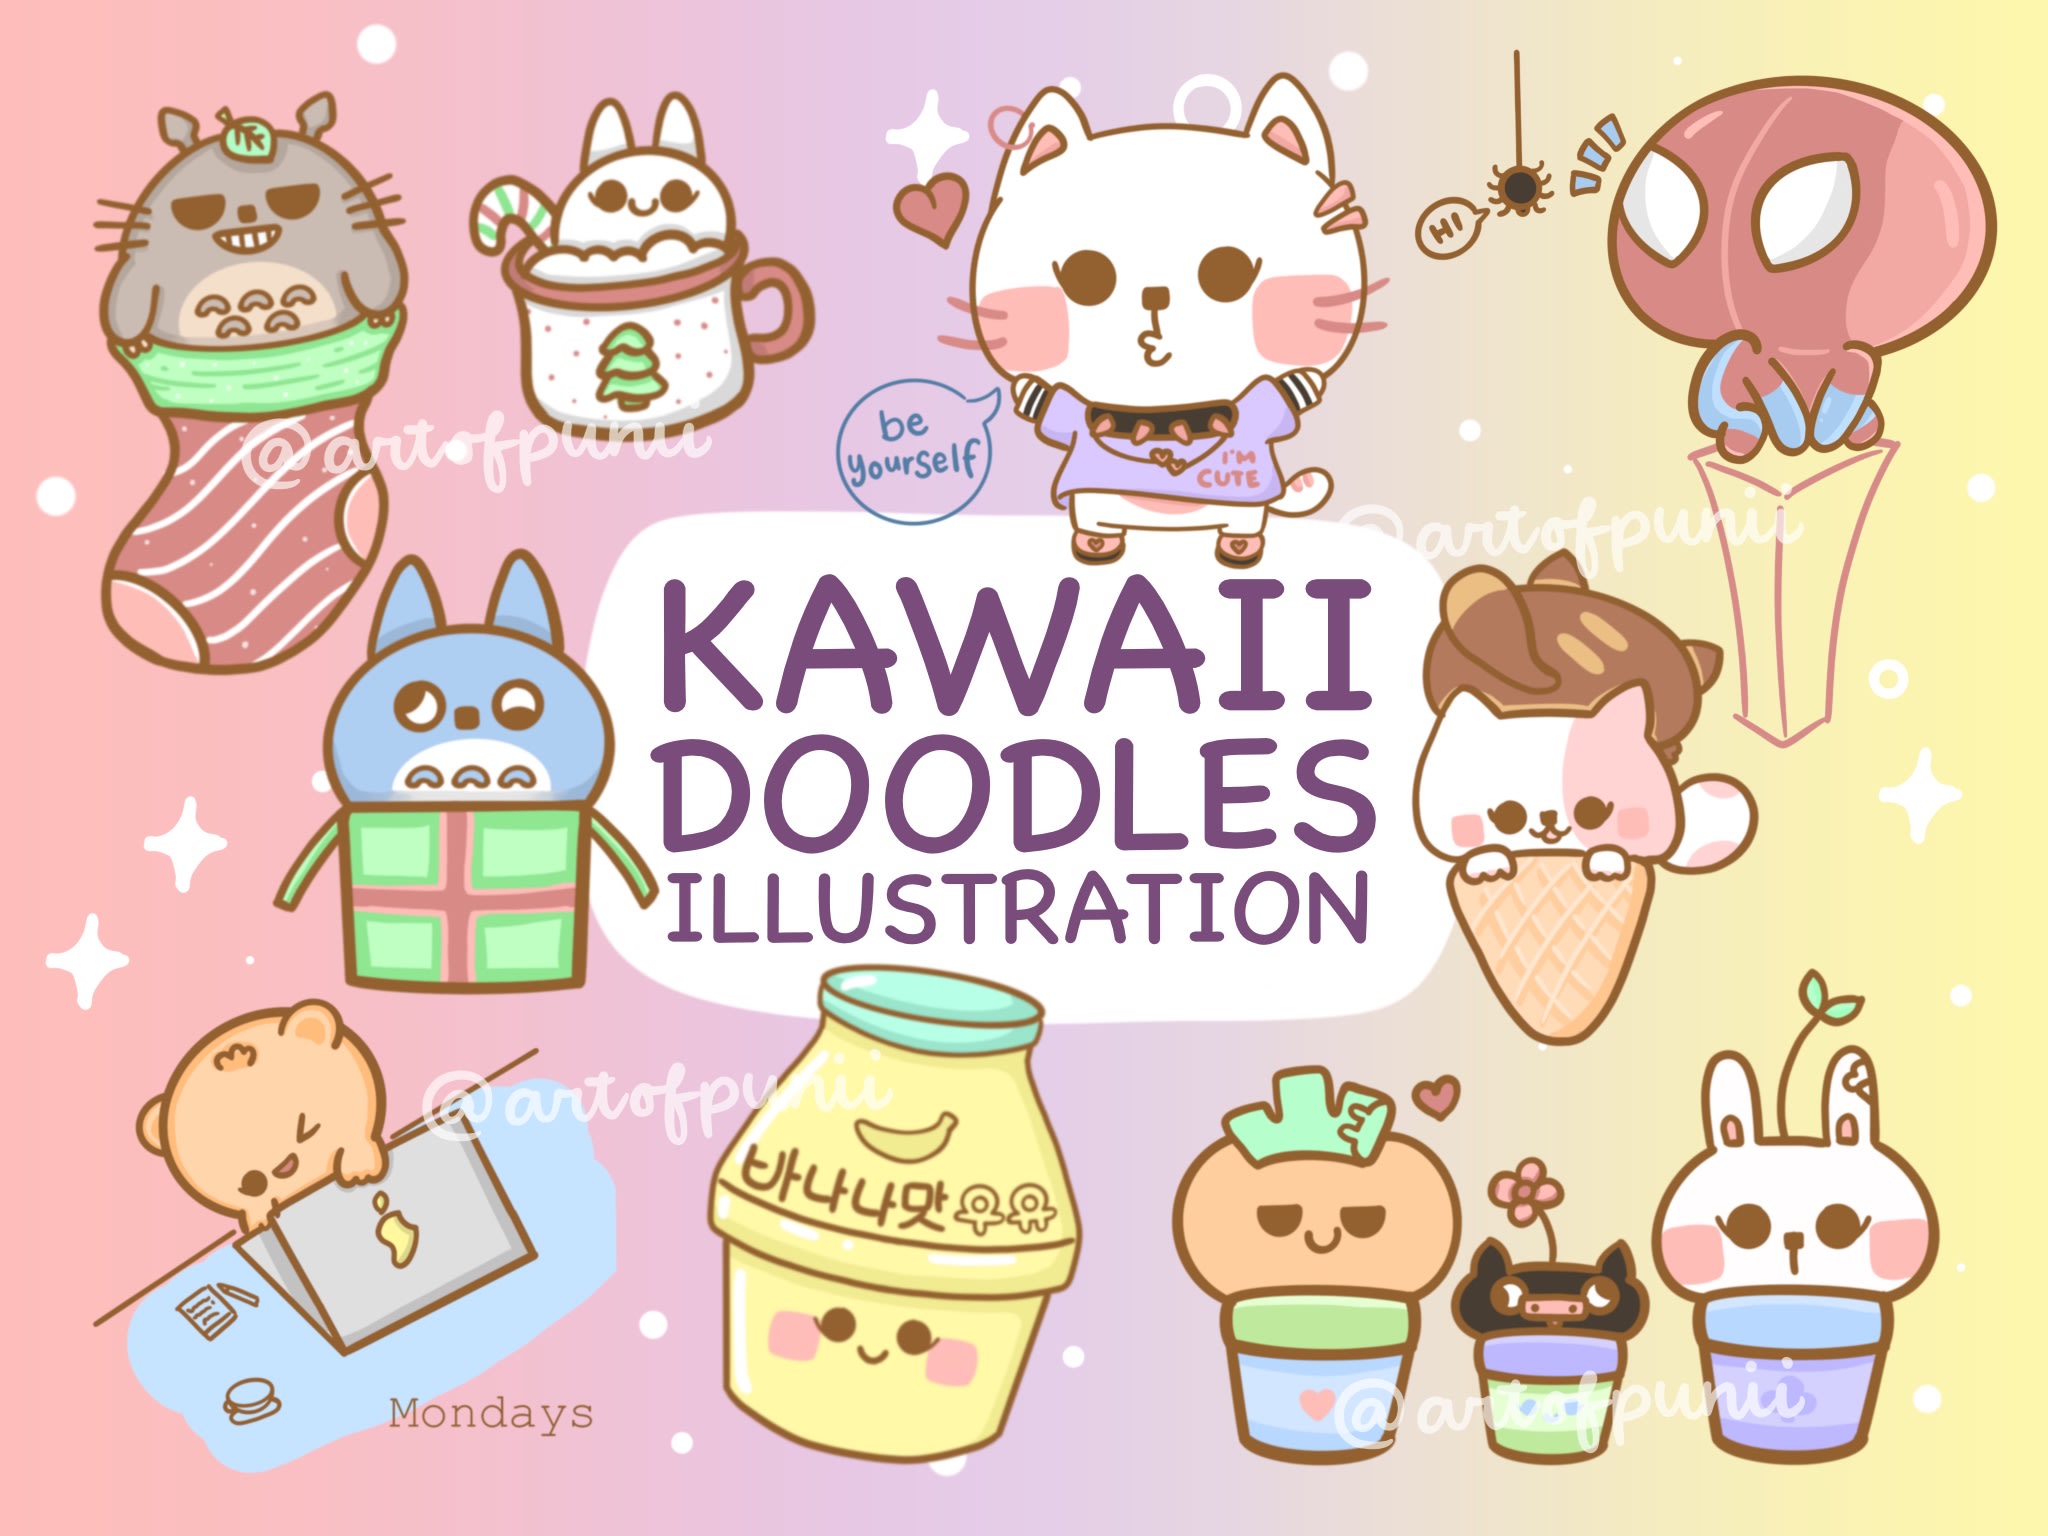 Dessiner de jolies illustrations de nourriture kawaii, d'animaux, d'objets